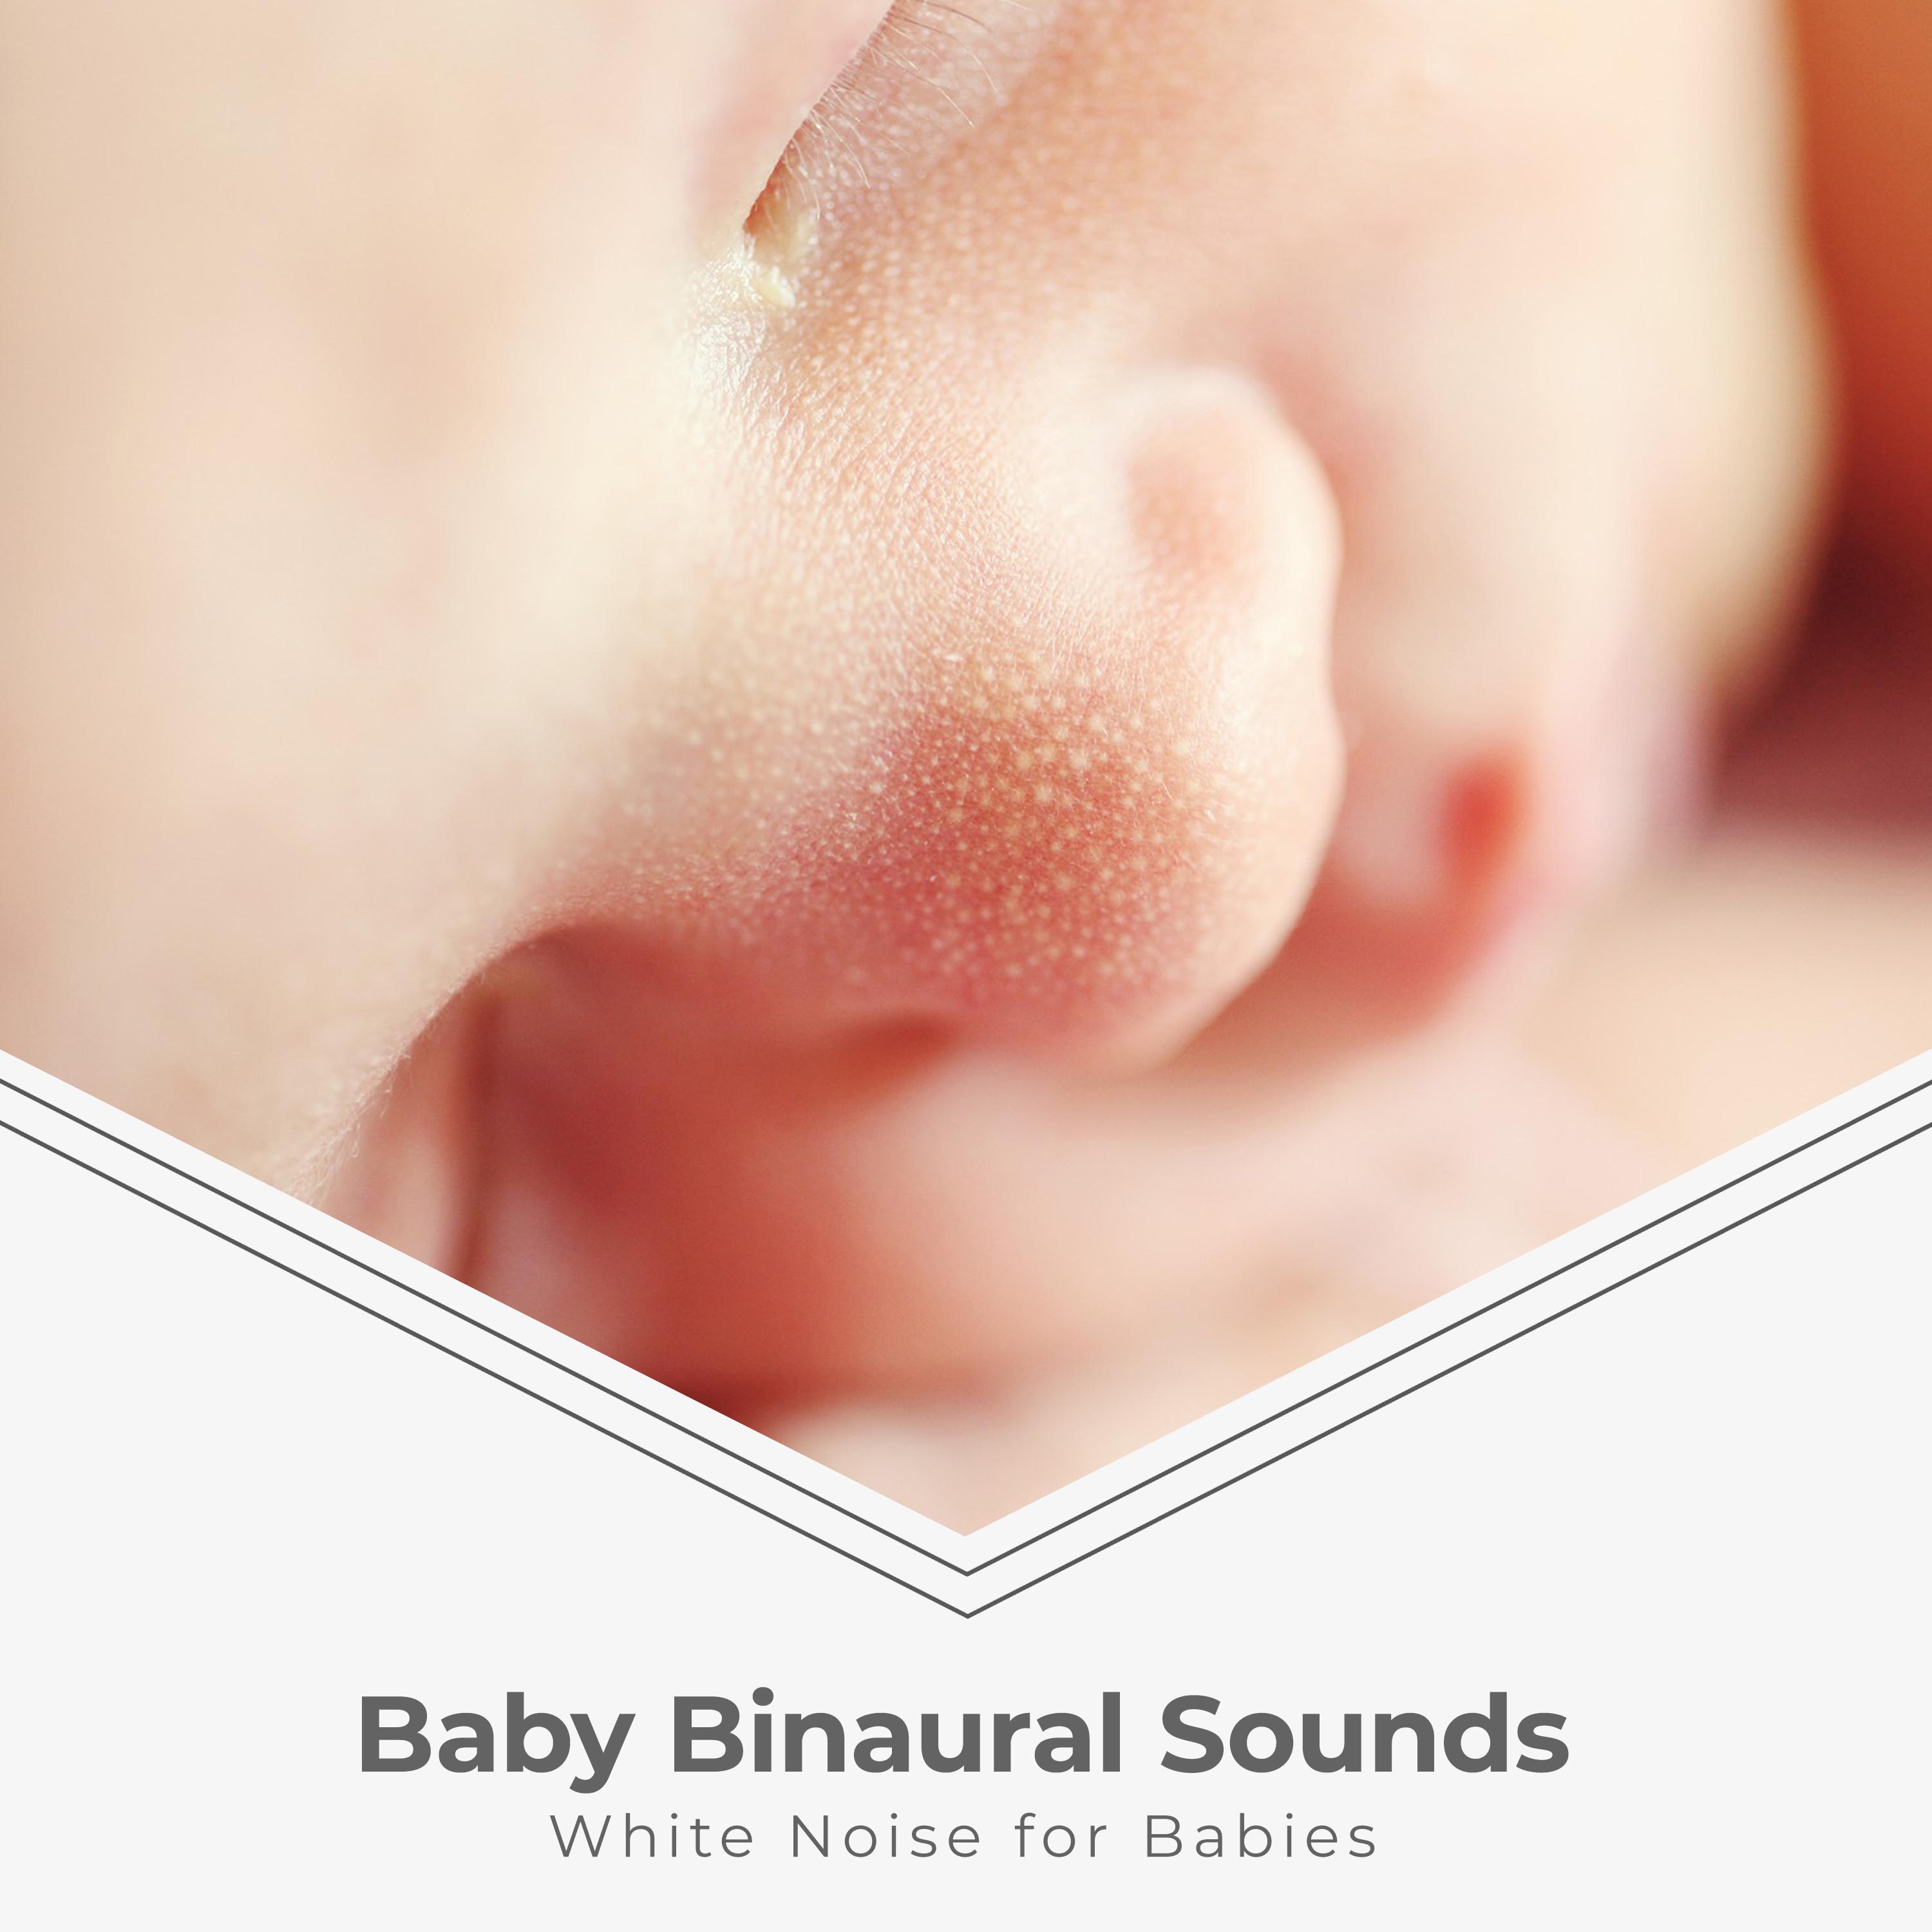 Baby Binaural Sounds